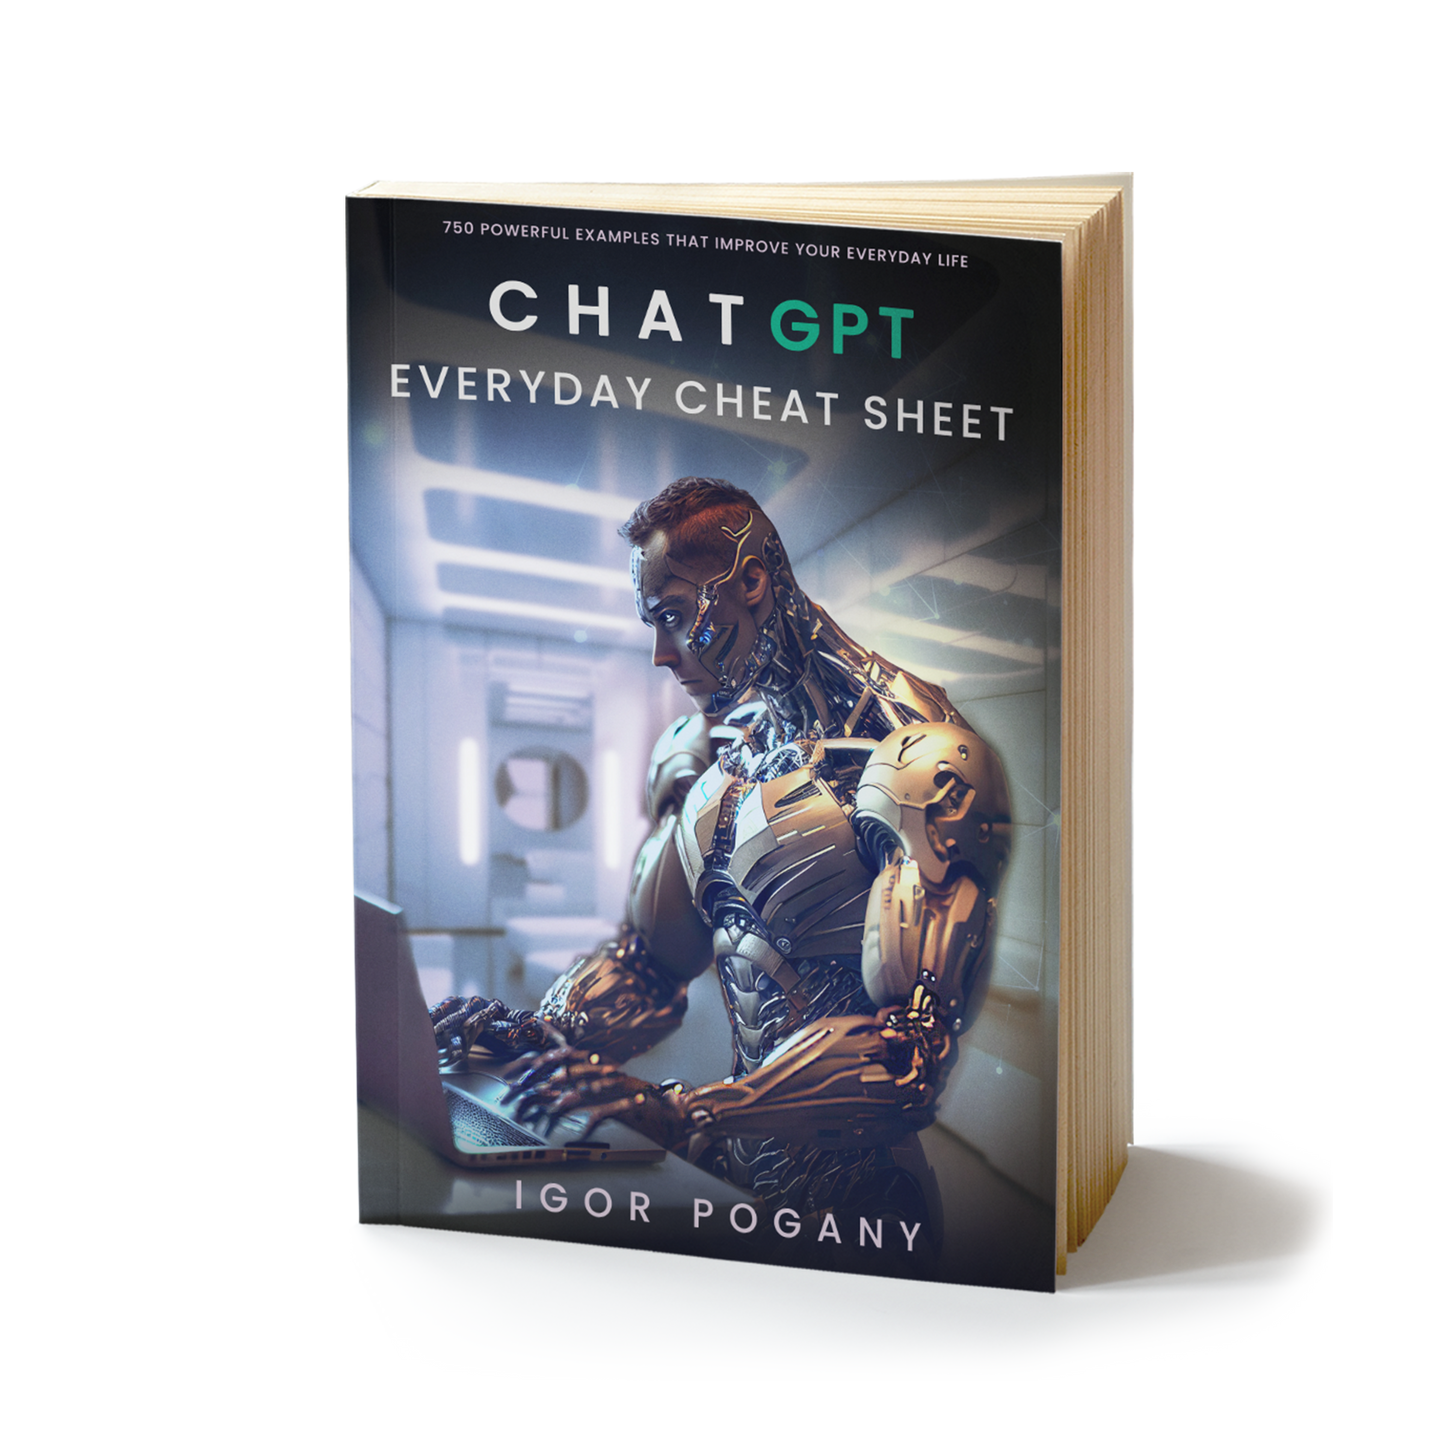 ChatGPT Everyday Cheat Sheet